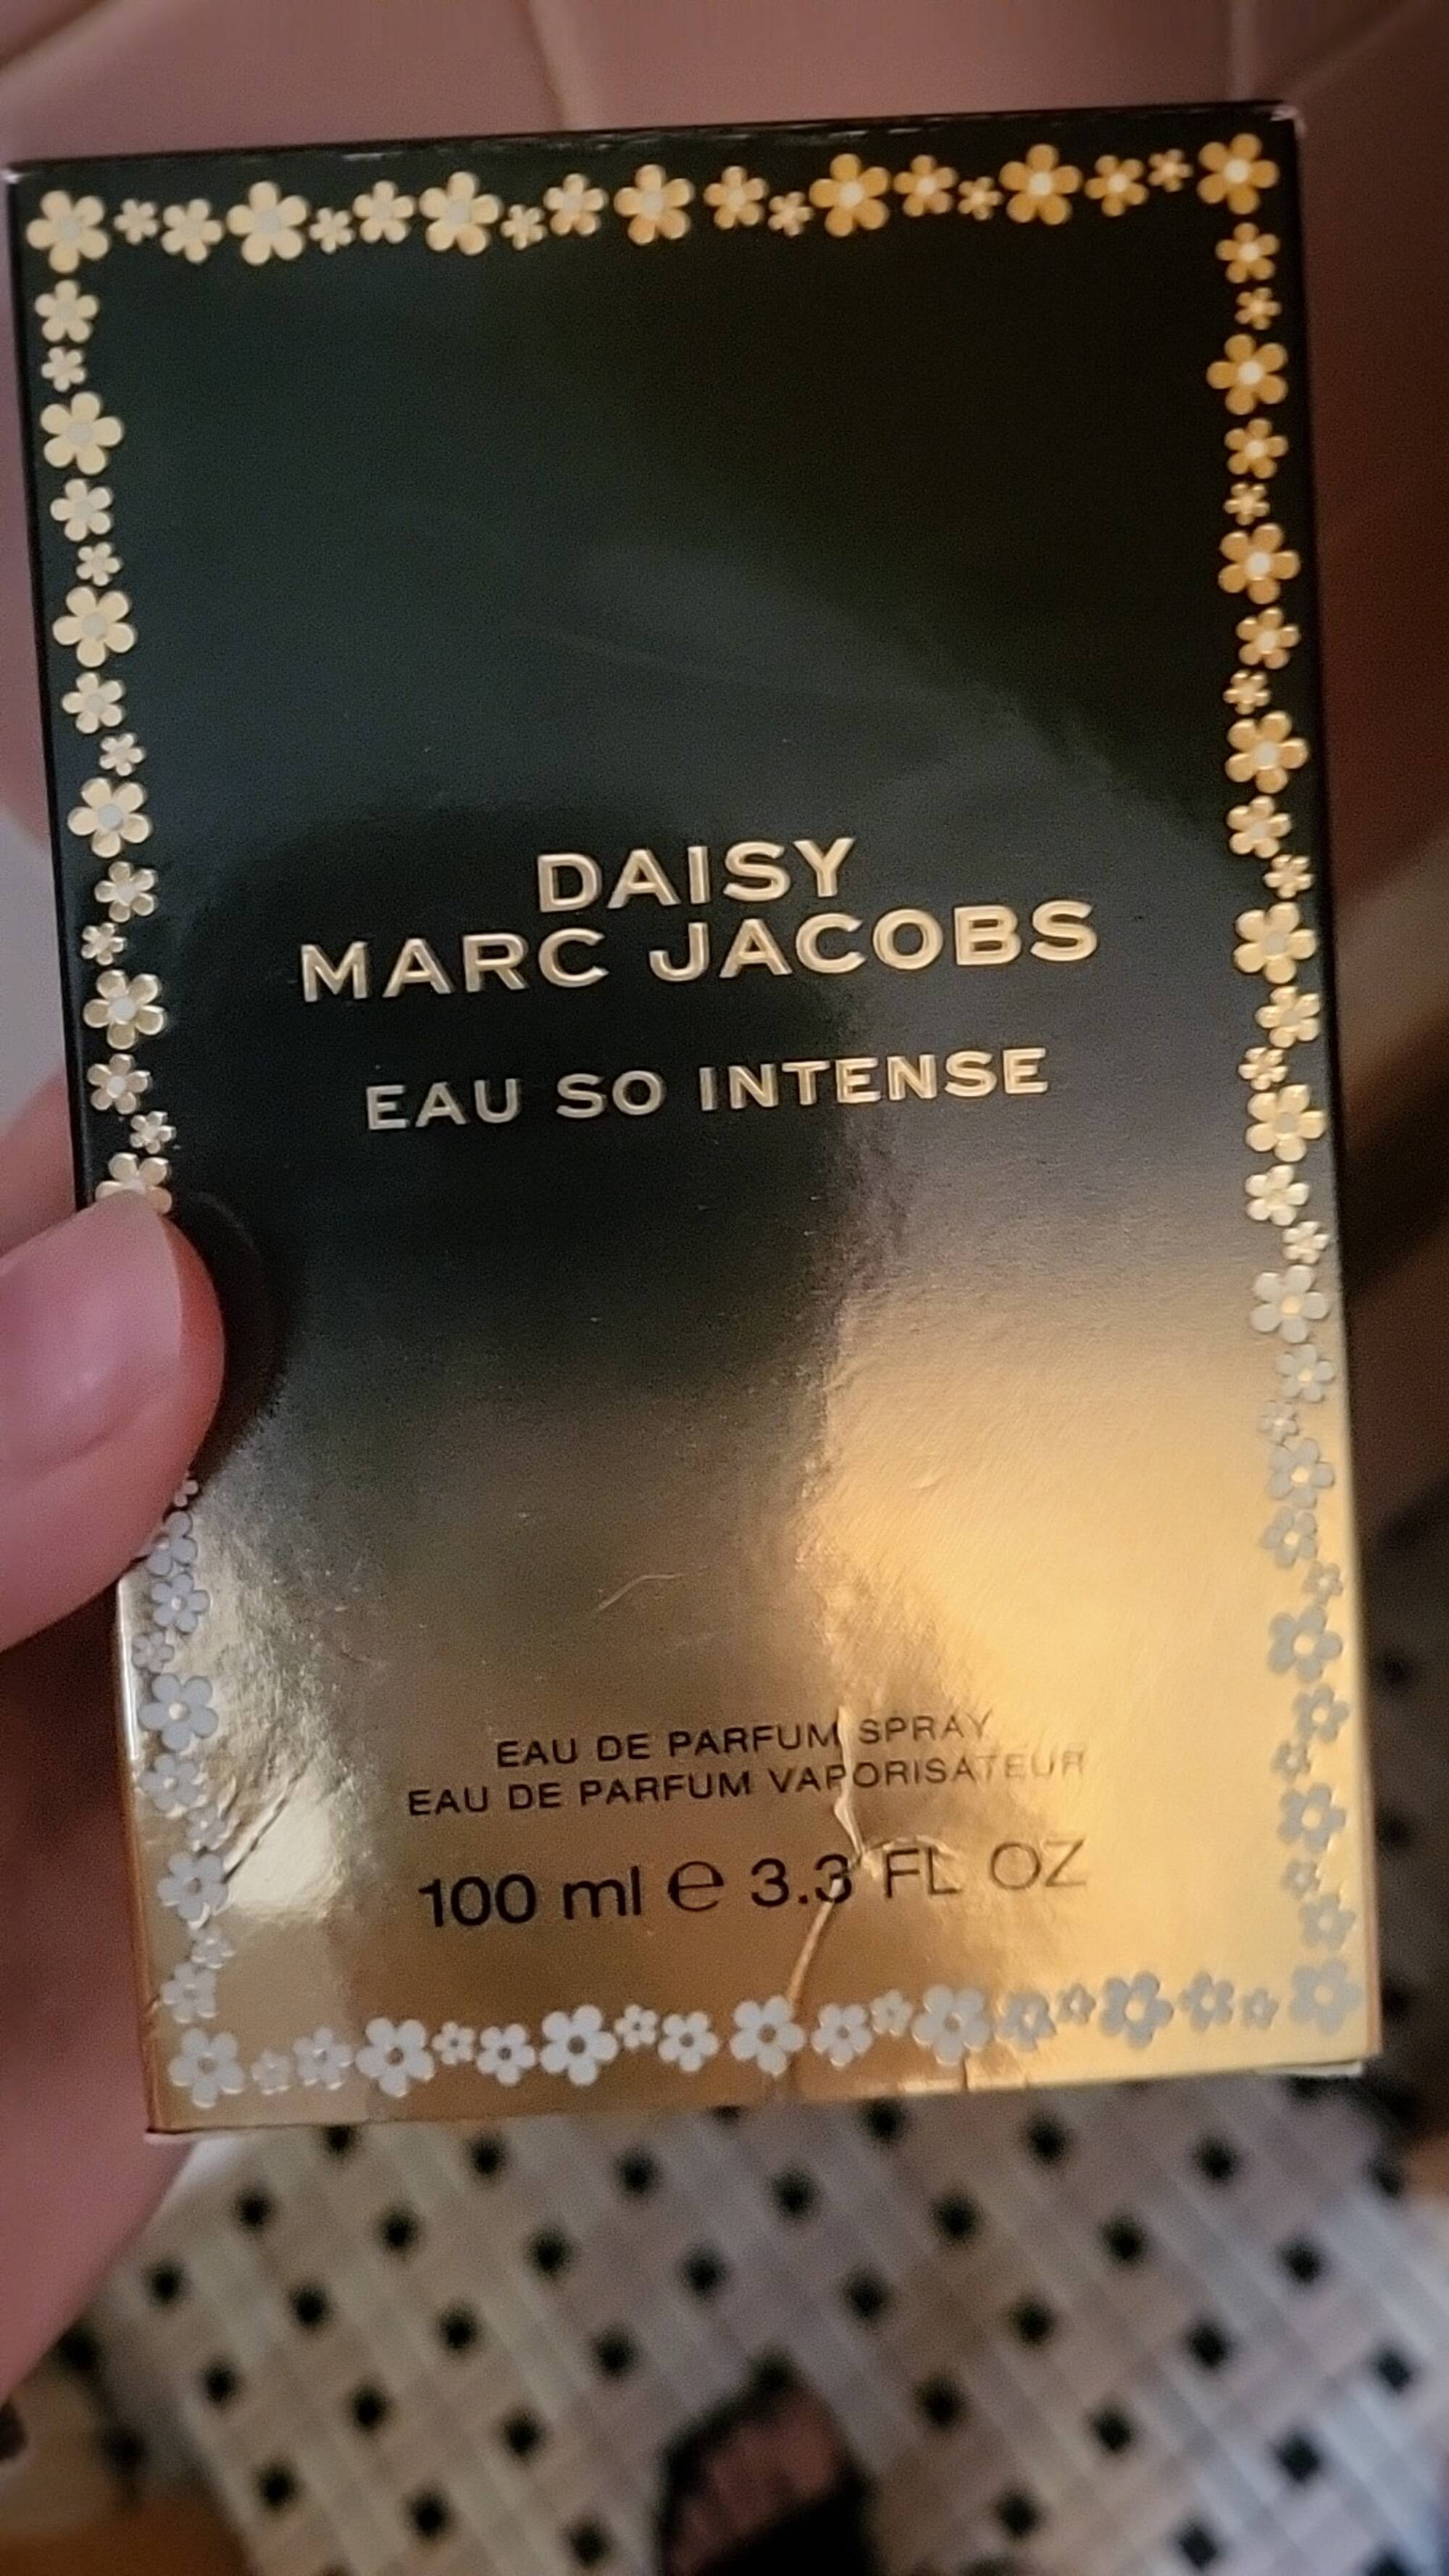 MARC JACOBS - Daisy eau so intense - Eau de parfum spray